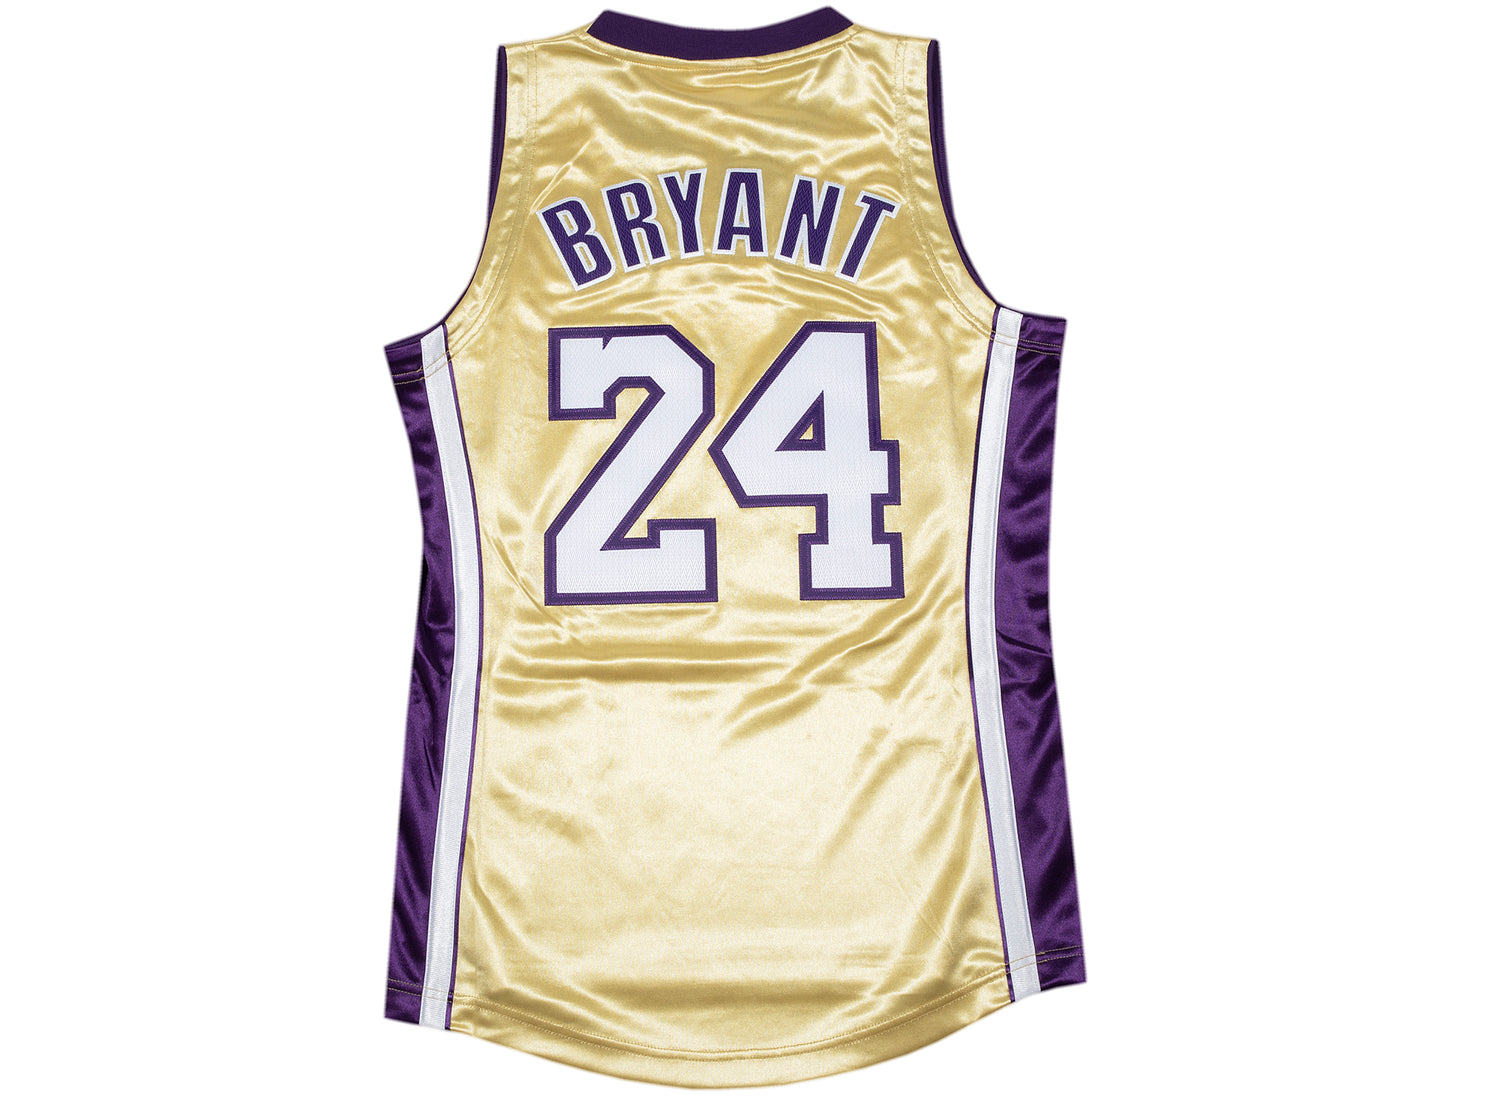 LOS ANGELES LAKERS *Kobe Bryant* NBA SHIRT M. BOYS Other Shirts